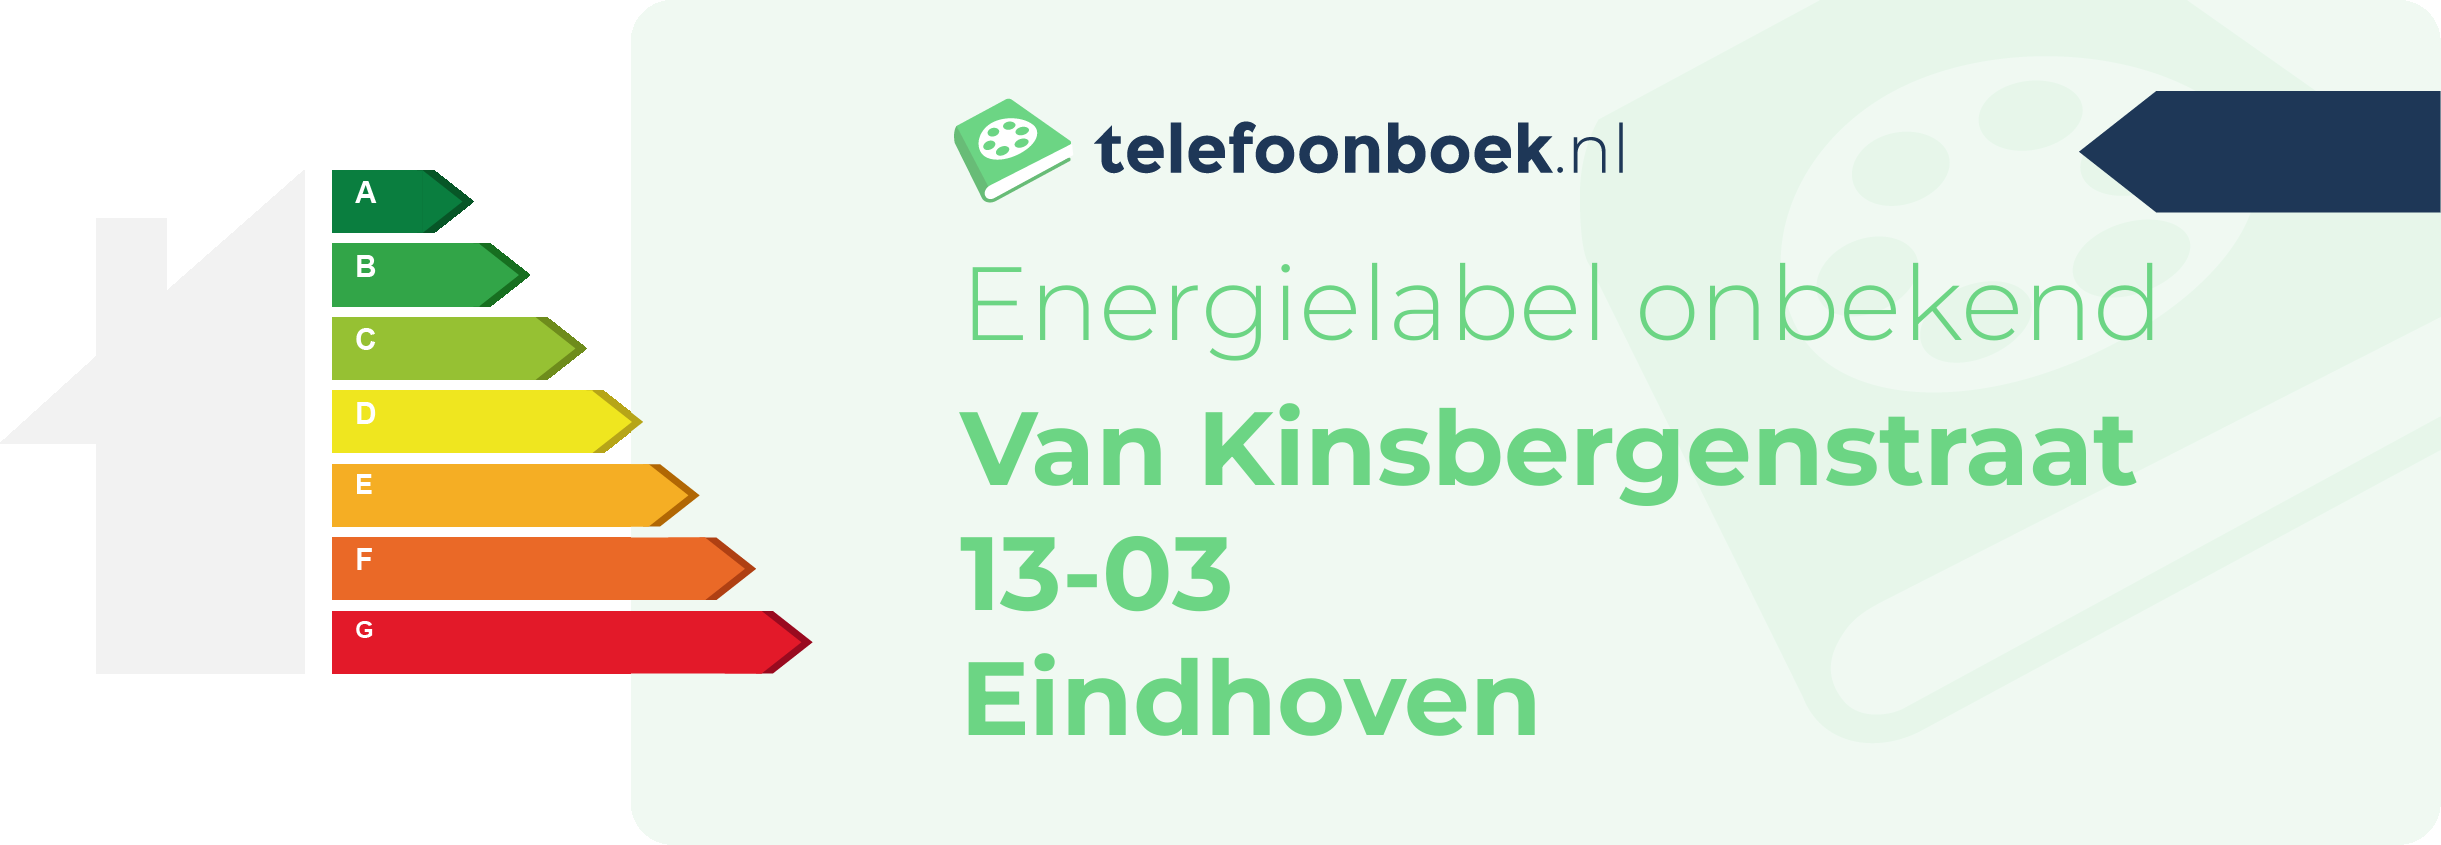 Energielabel Van Kinsbergenstraat 13-03 Eindhoven